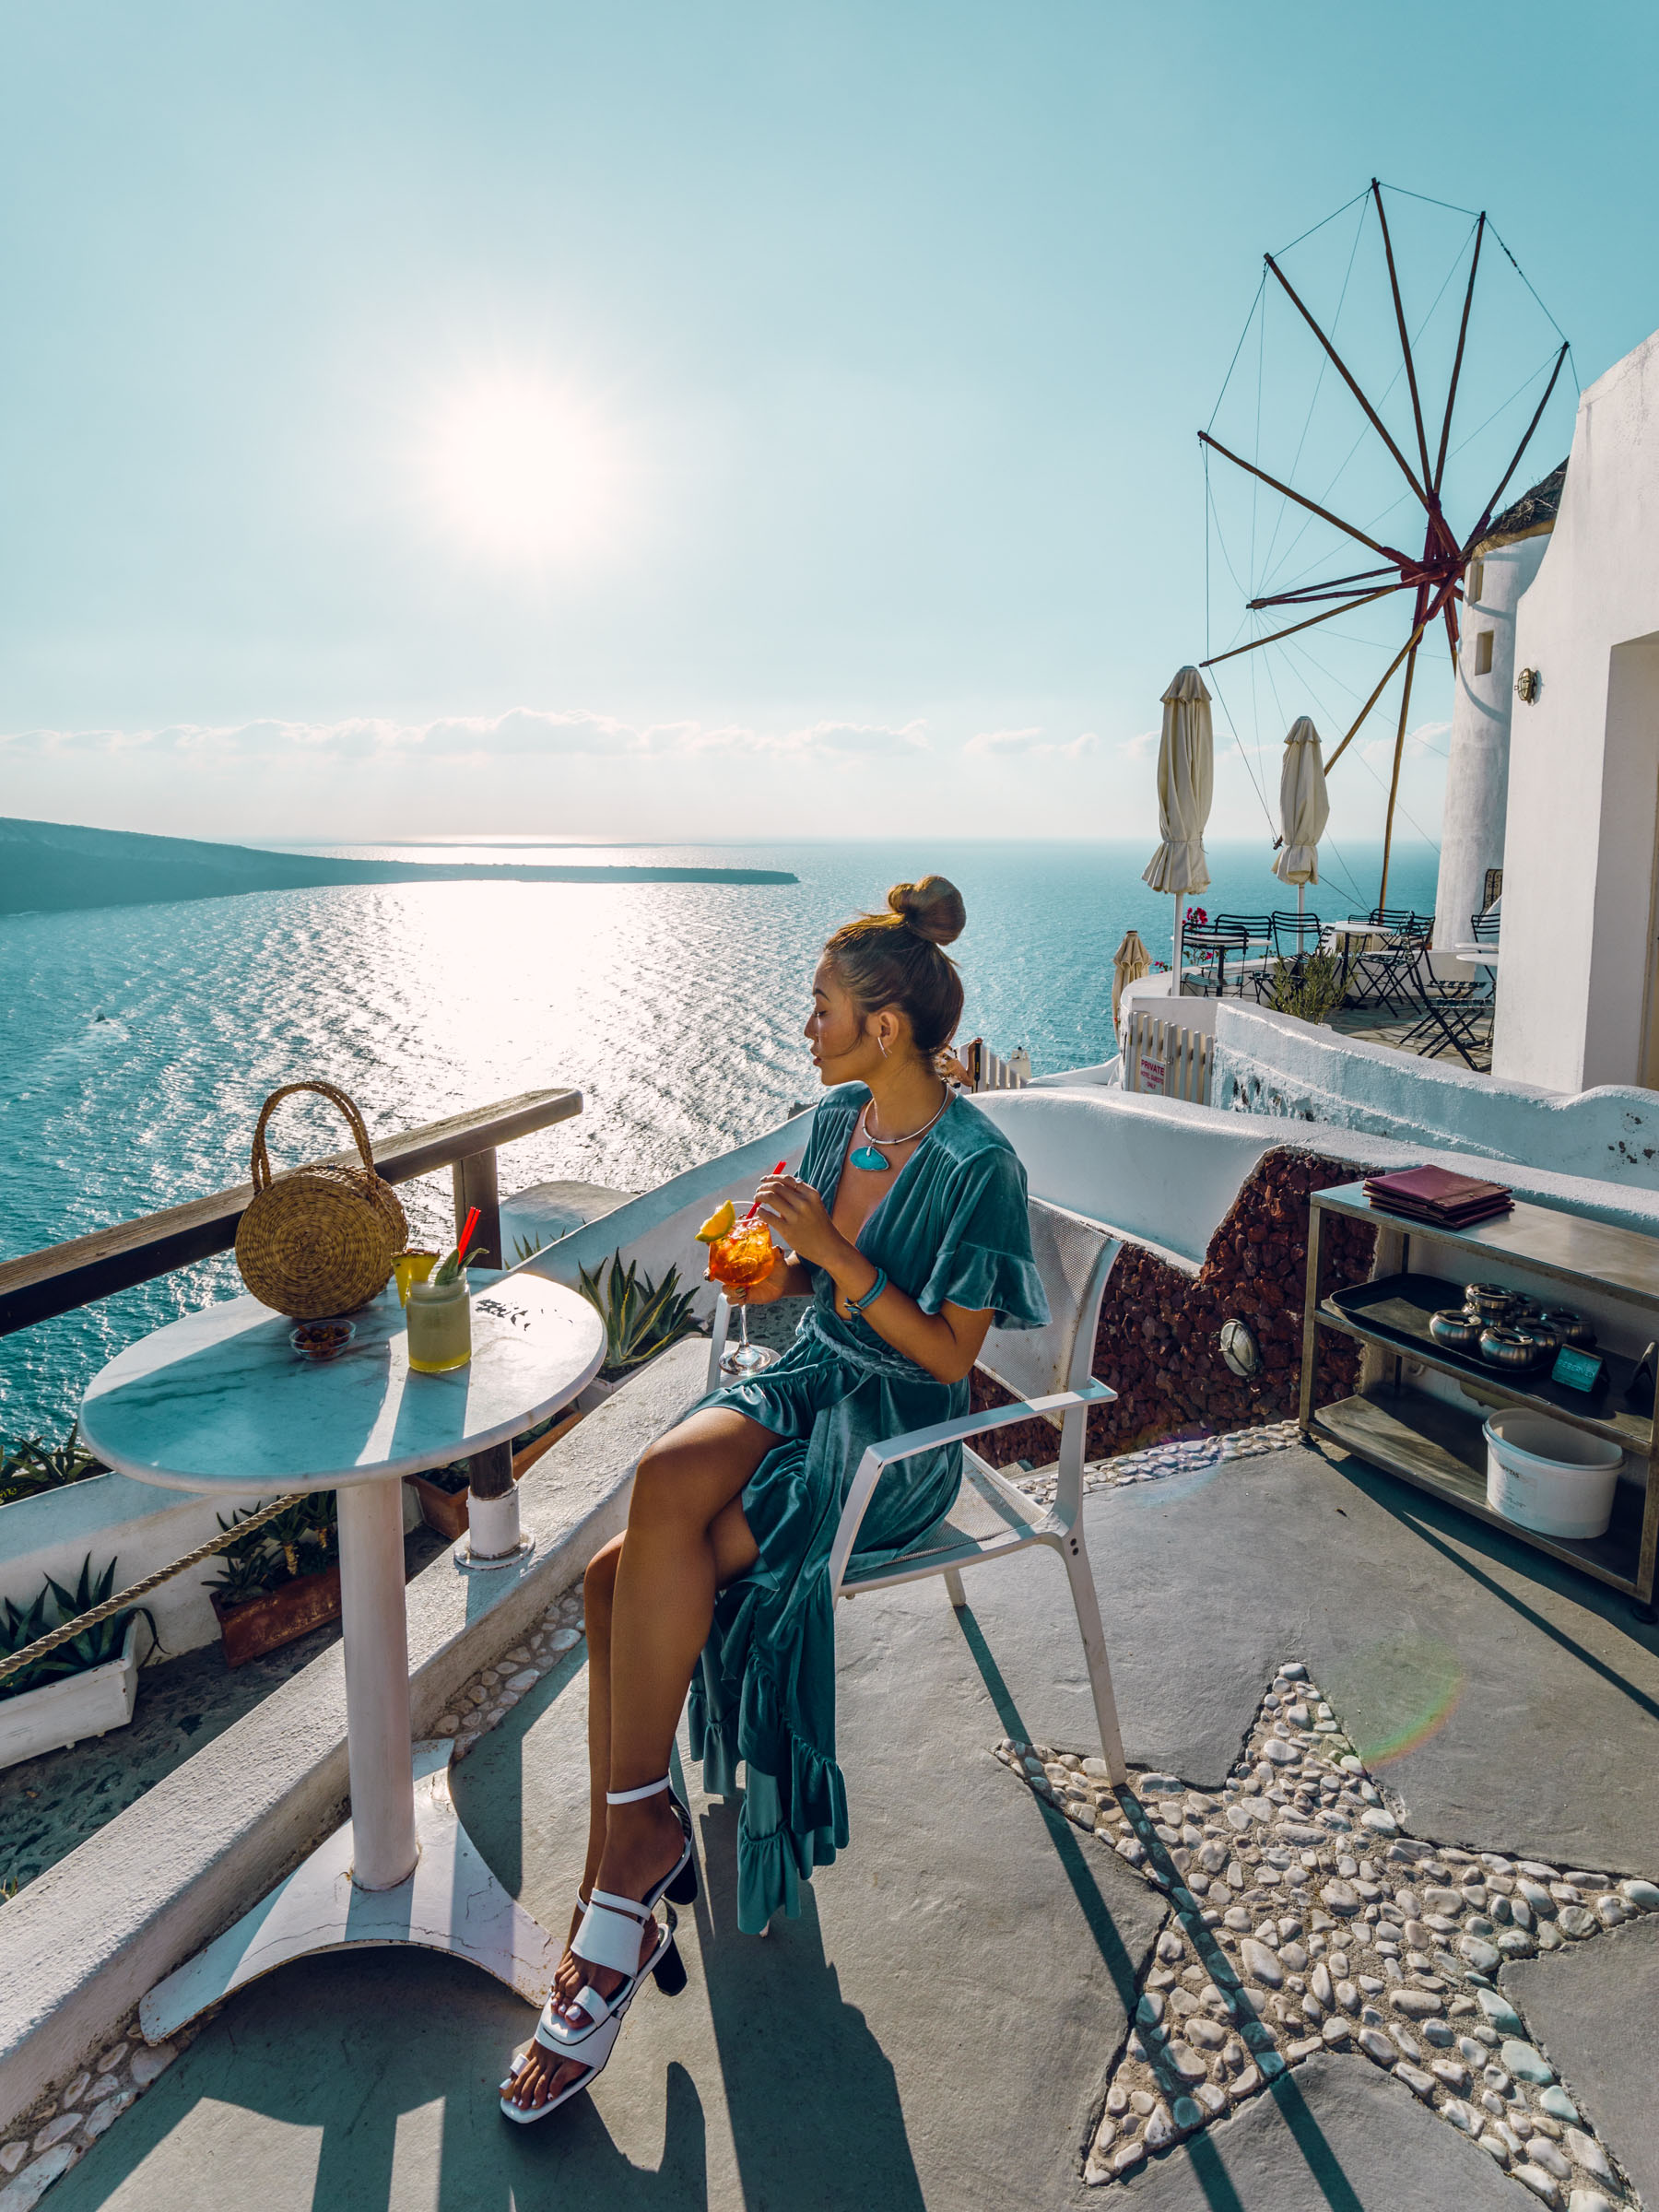 The Ultimate Greece Travel Guide - Santorini & Mykonos // Notjessfashion.com // travel blogger, greece travel tips, mykonos travel tips, santorini travel tips, fashion travel blogger, santorini photos, mykonos photos, santorini travel spots, mykonos travel spots